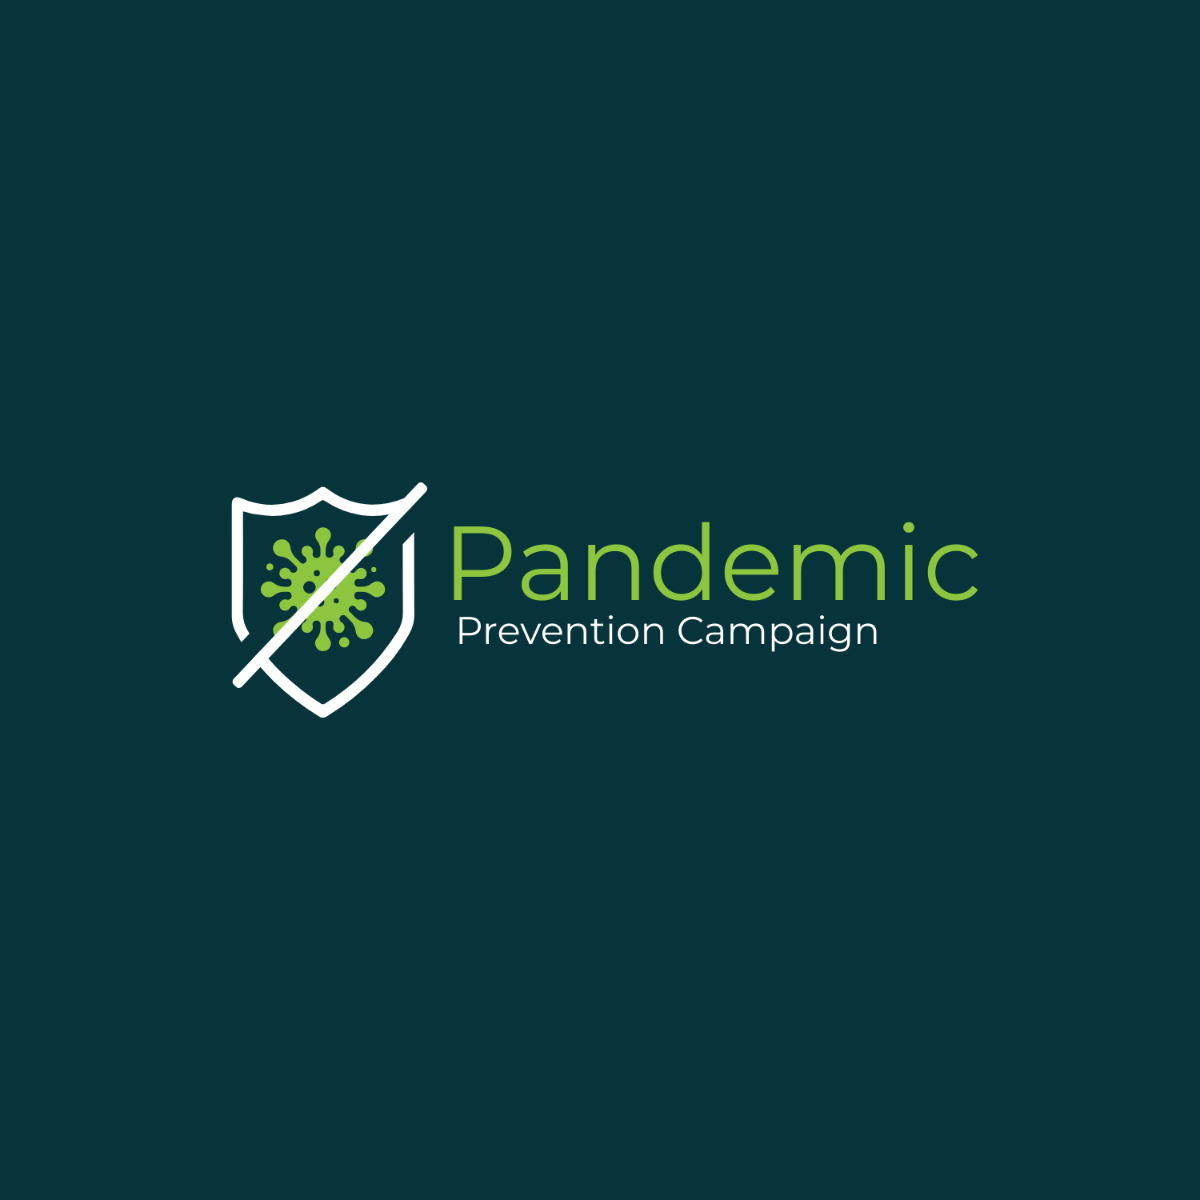 Pandemic Prevention Campaign Logo